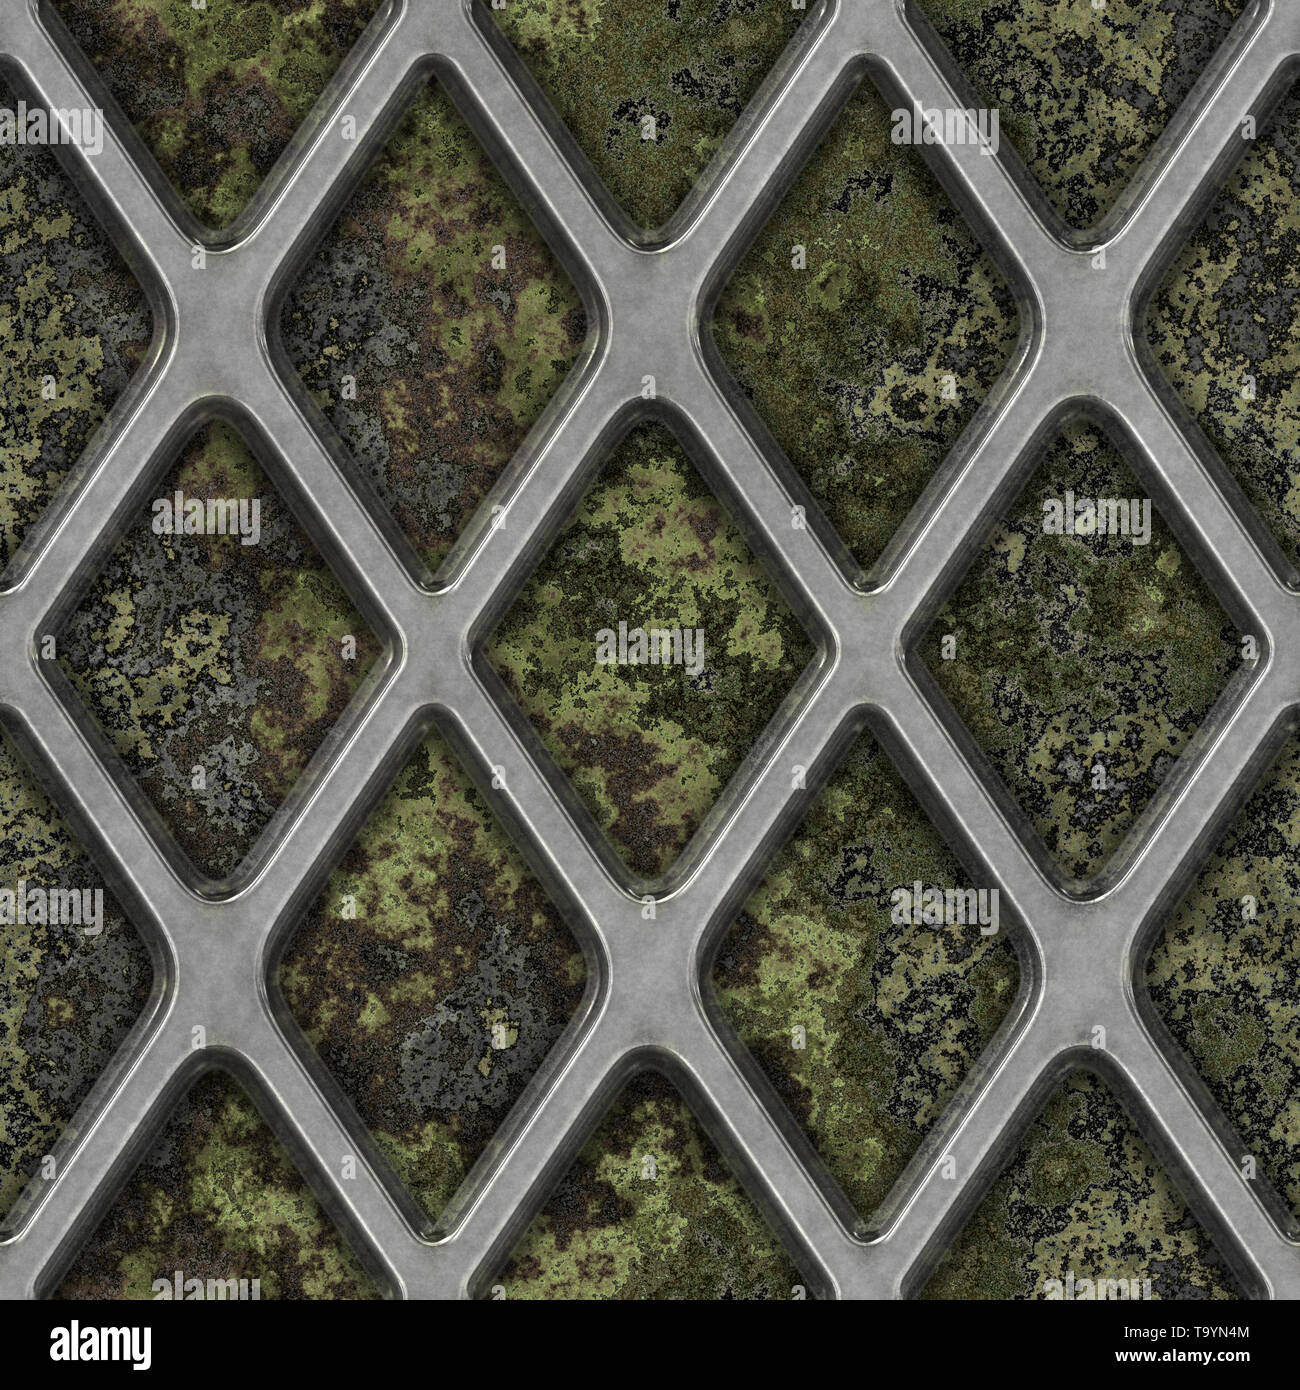 Grate on Granite Seamless Texture Tile Stock Photo